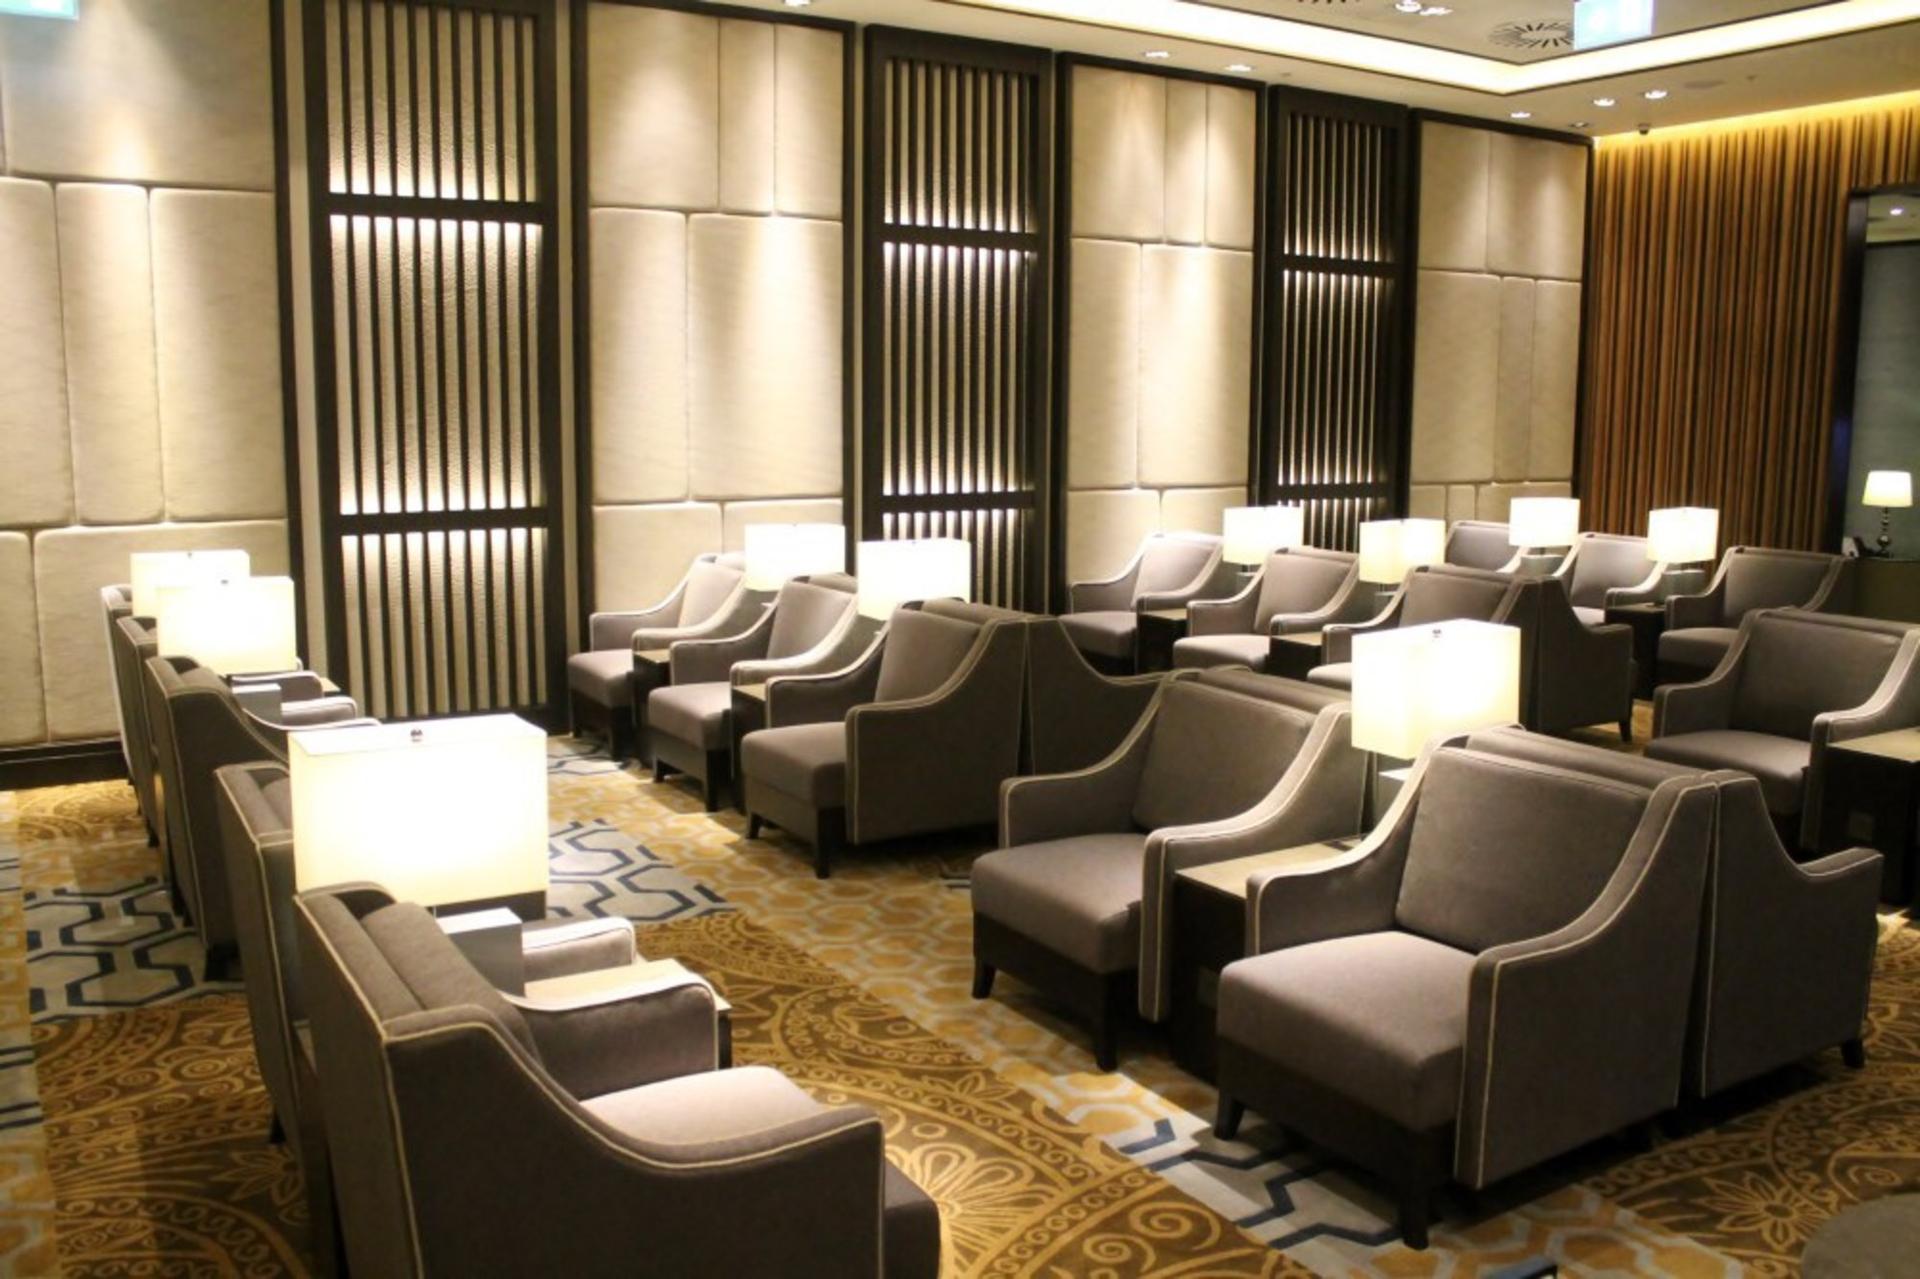 Plaza Premium Lounge image 2 of 68